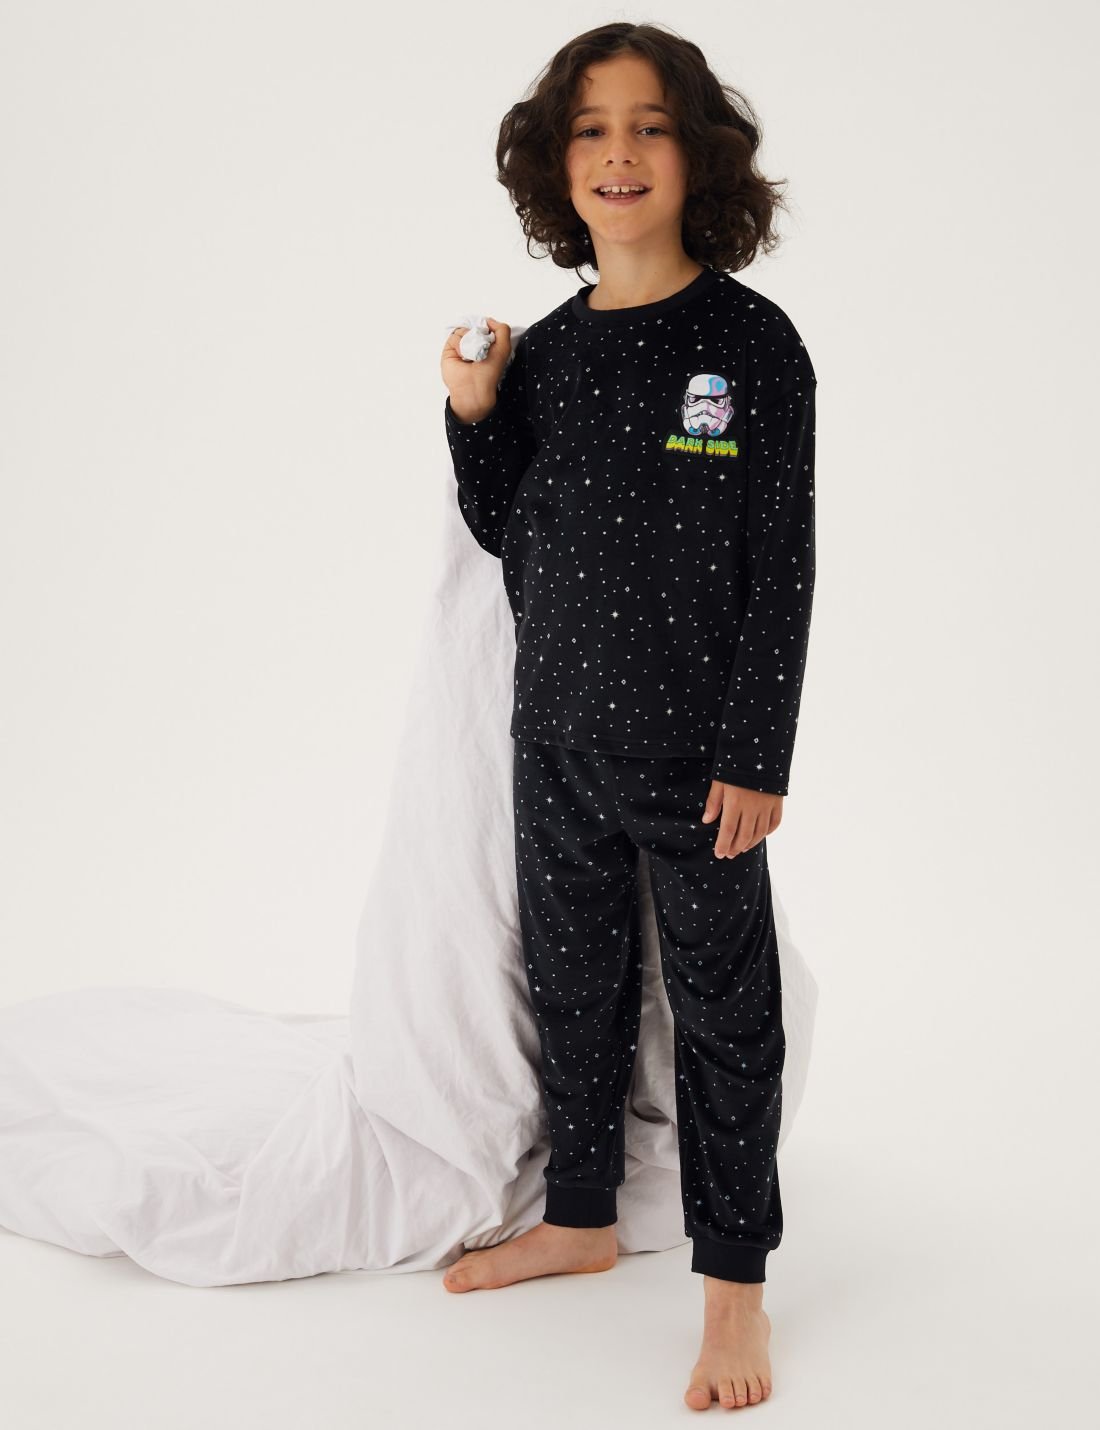 Star Wars™ Kadife Pijama Takımı (5-14 Yaş)